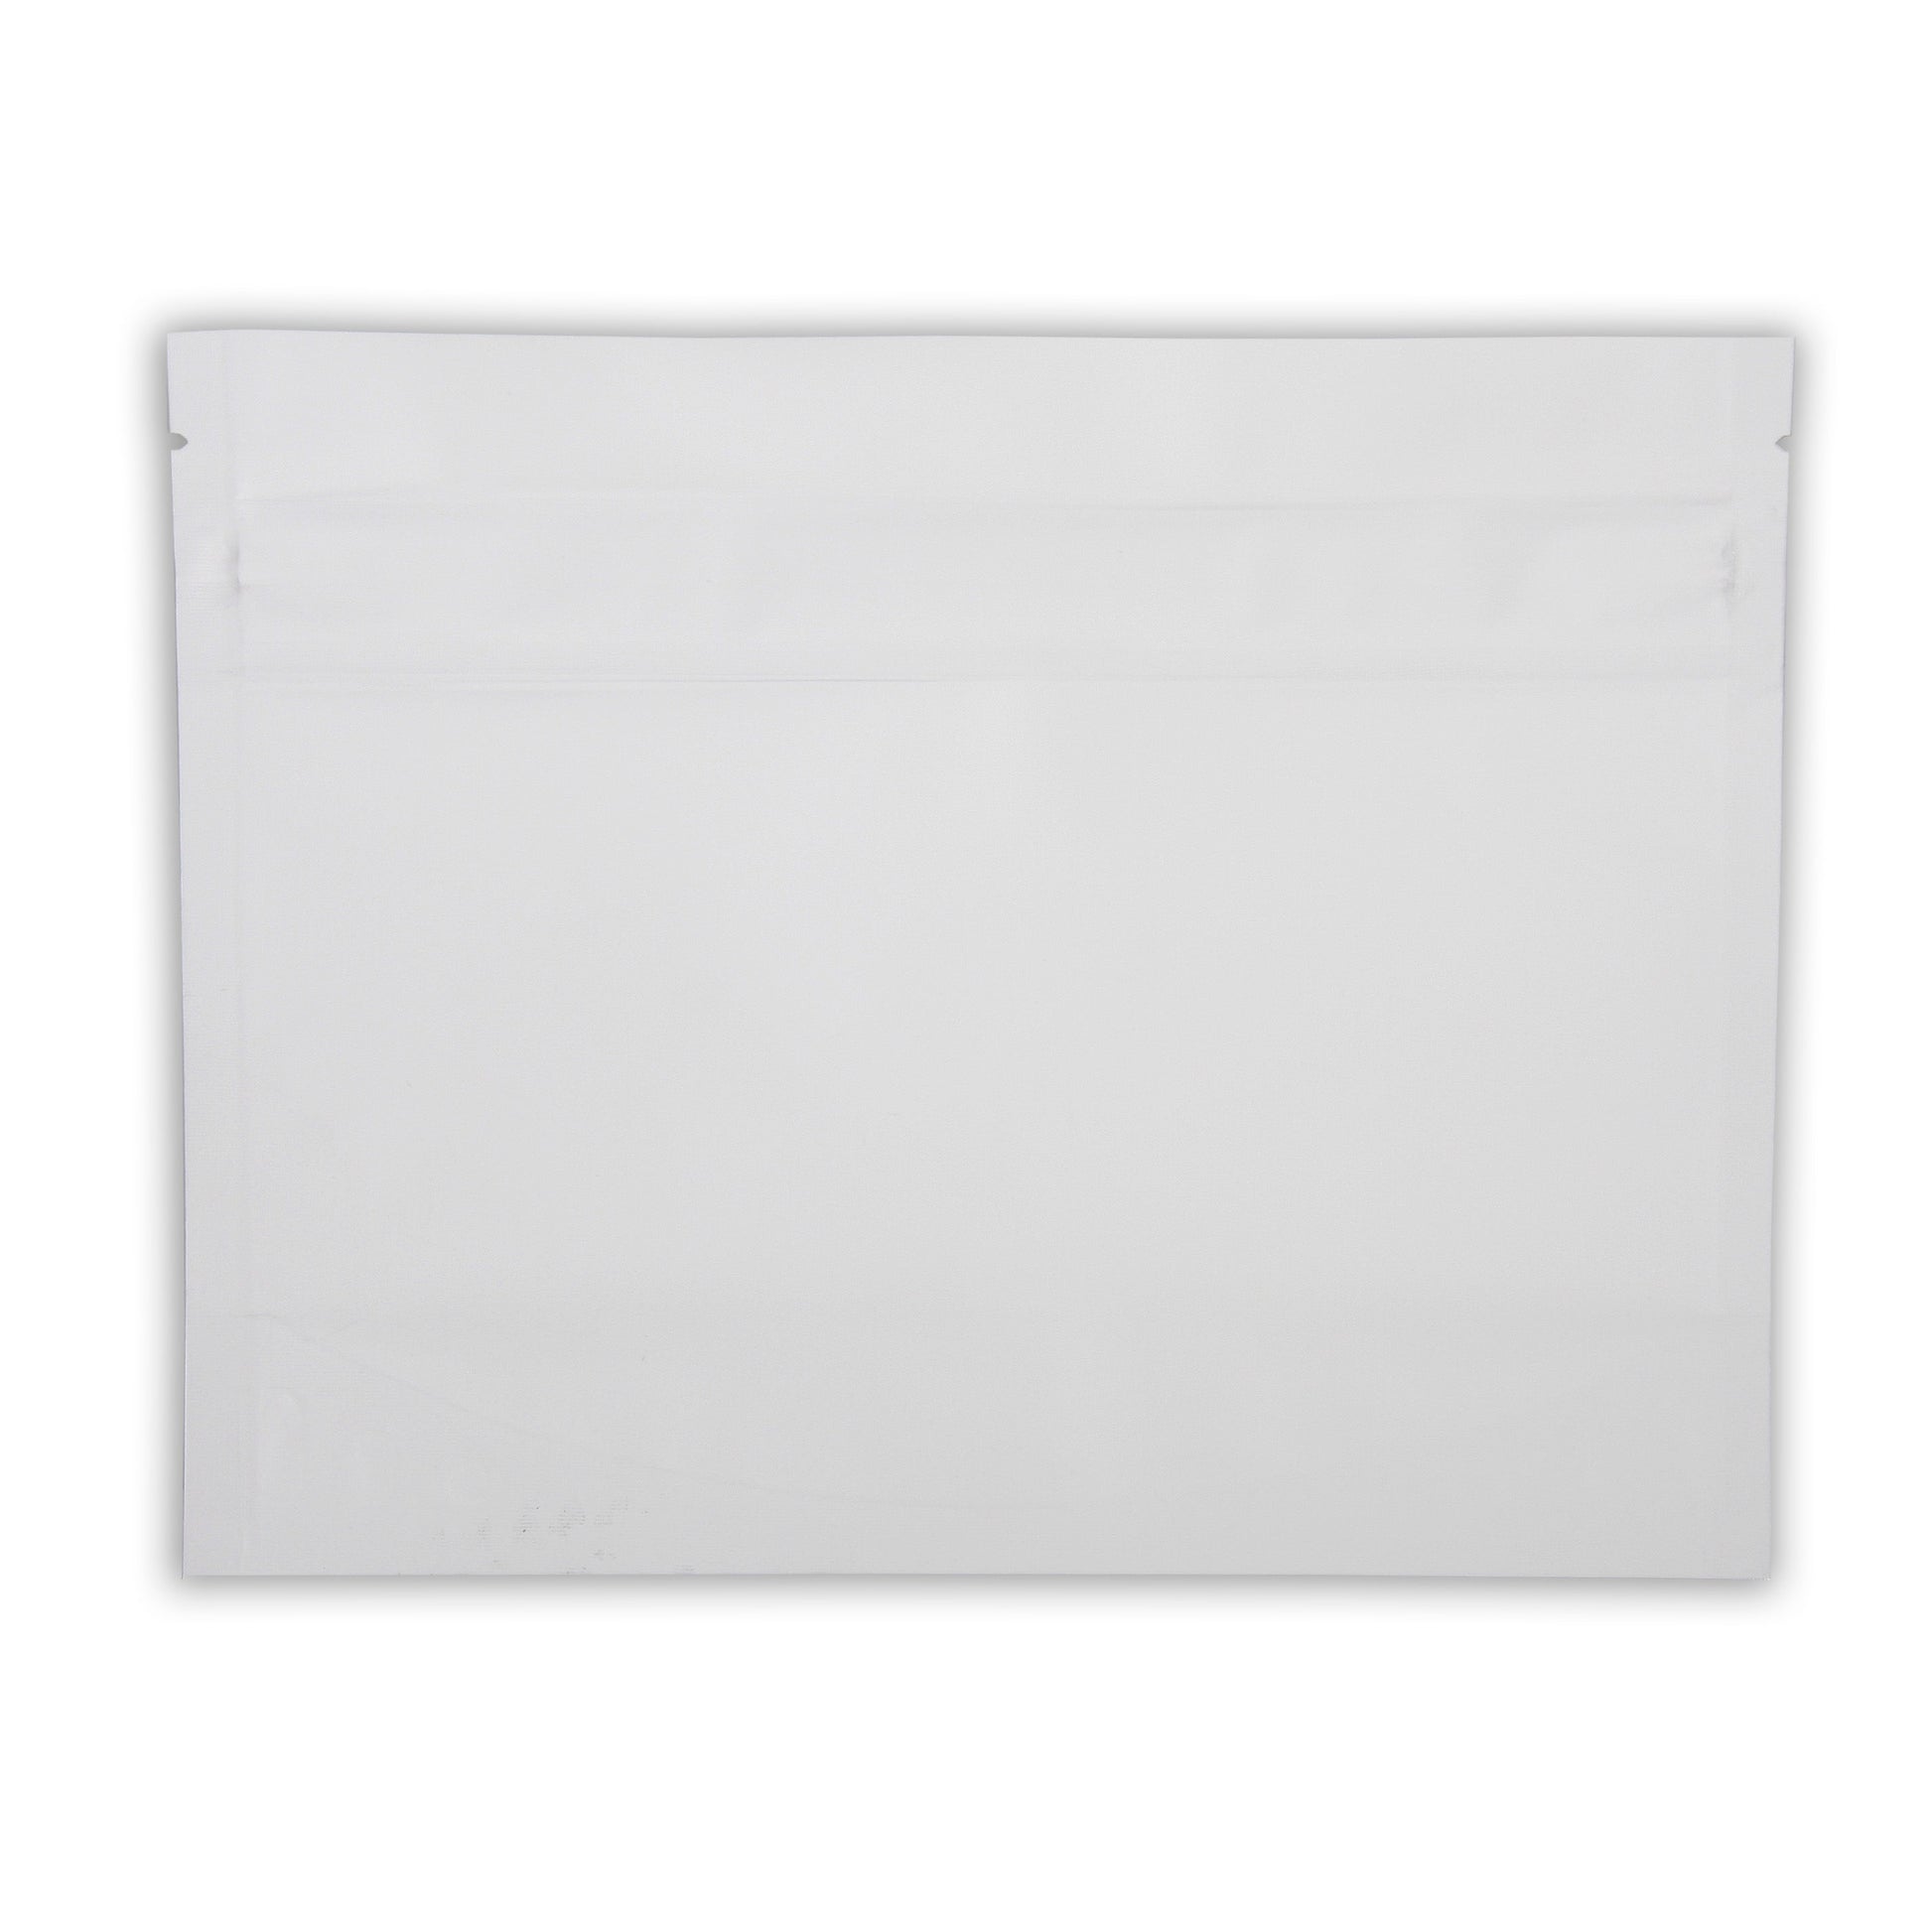 Bag King Child Resistant Opaque Exit Bag (12x9) White